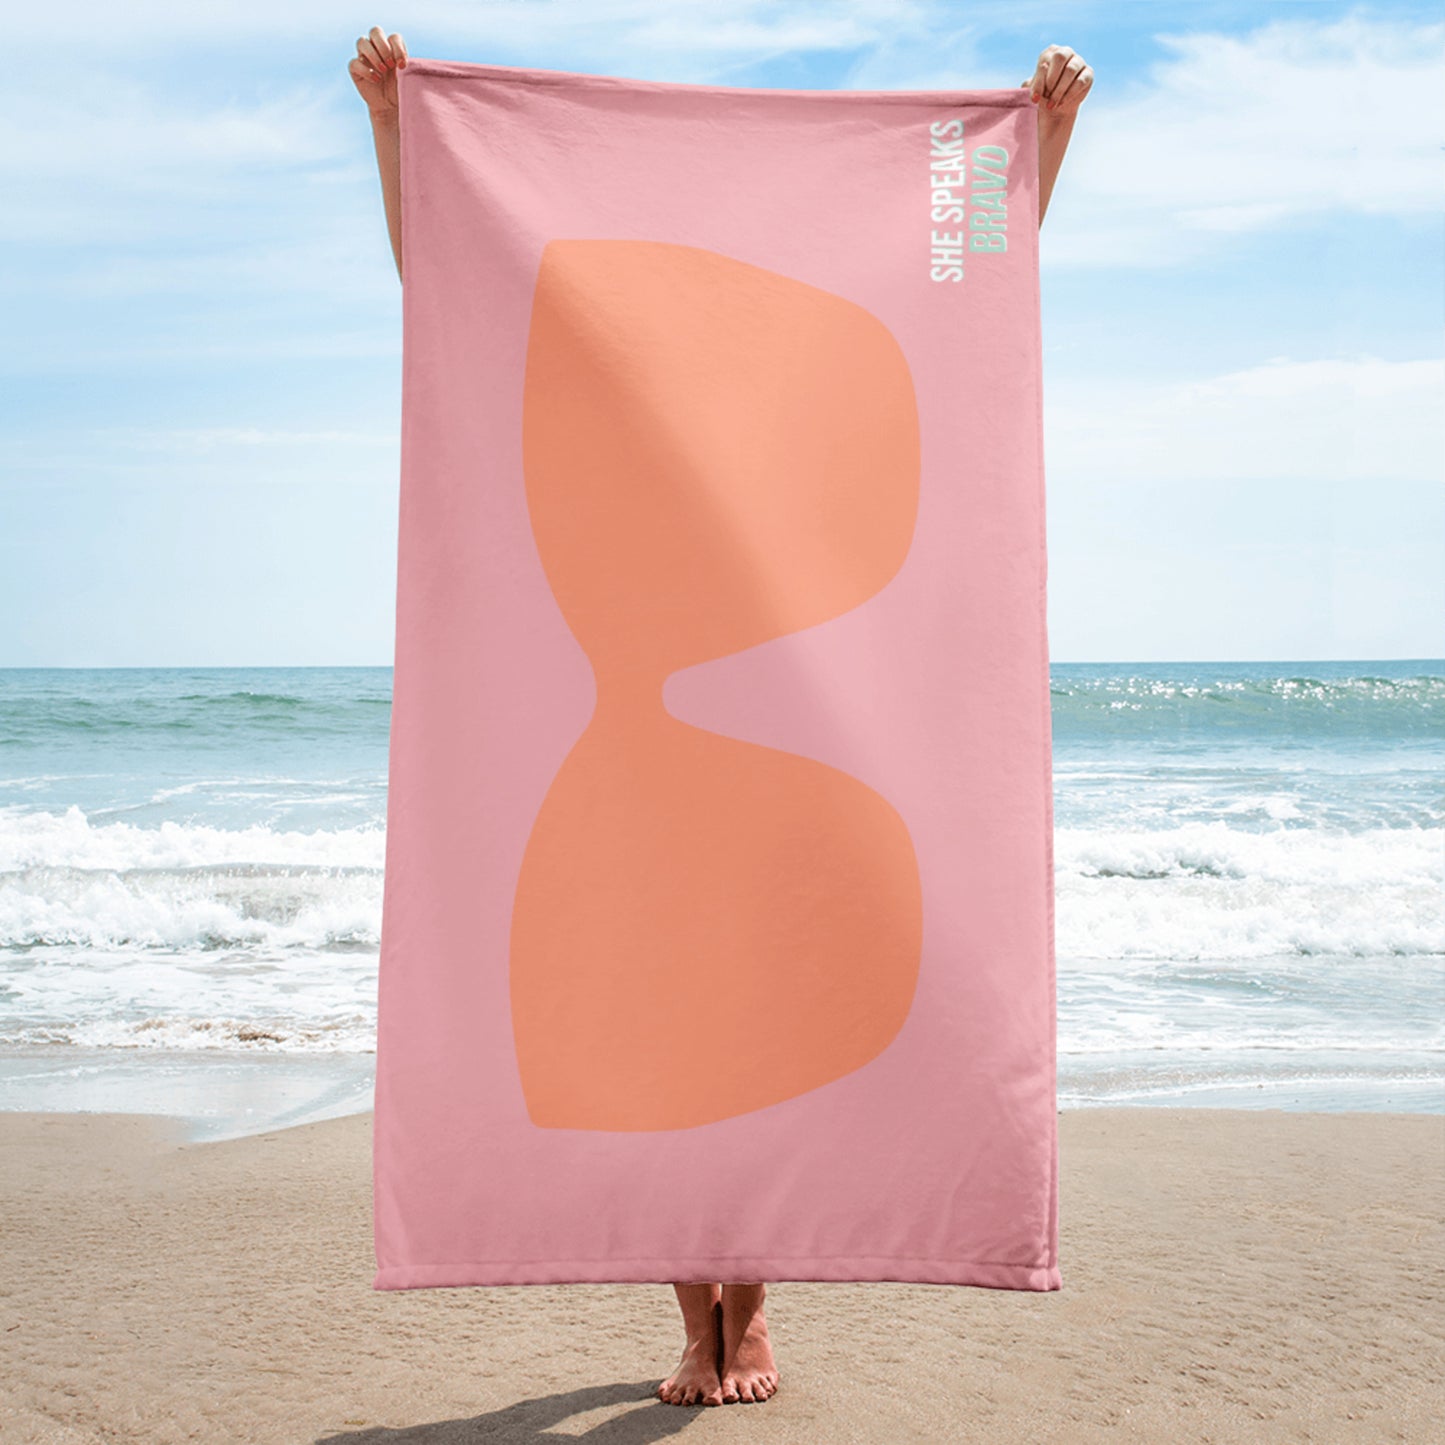 It's Giving Shades Beach Towel - Pink/Orange